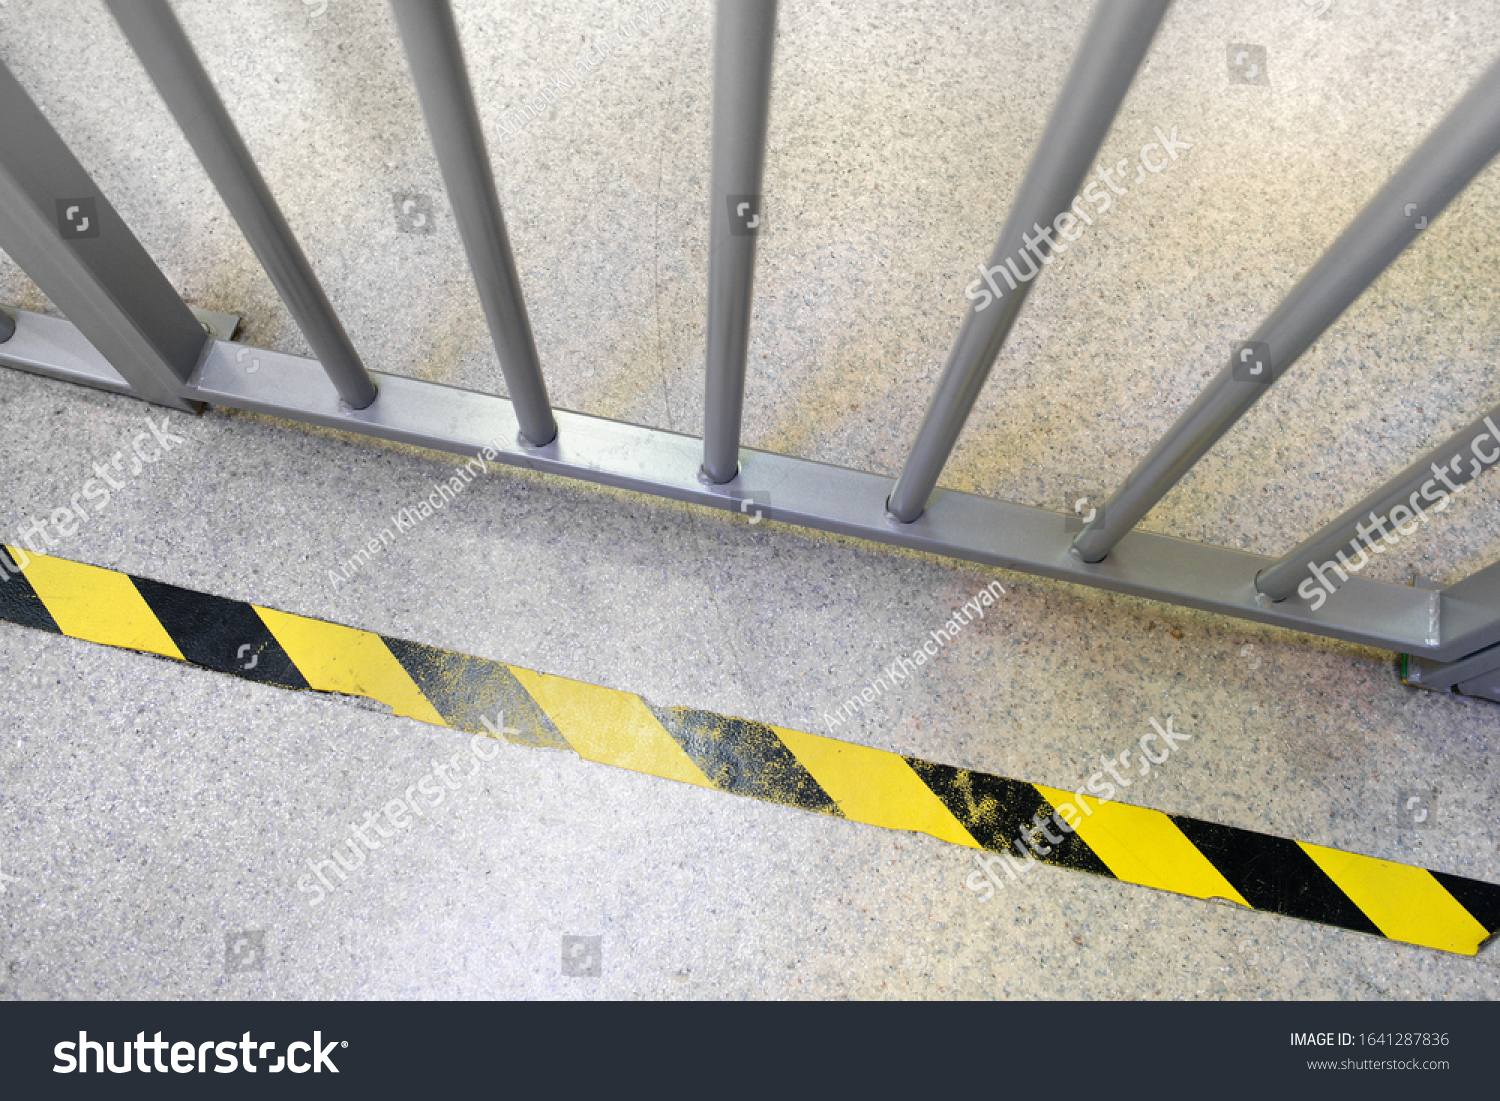 Metal Bars Prison Opened Jail Cell Stock Photo 1641287836 | Shutterstock